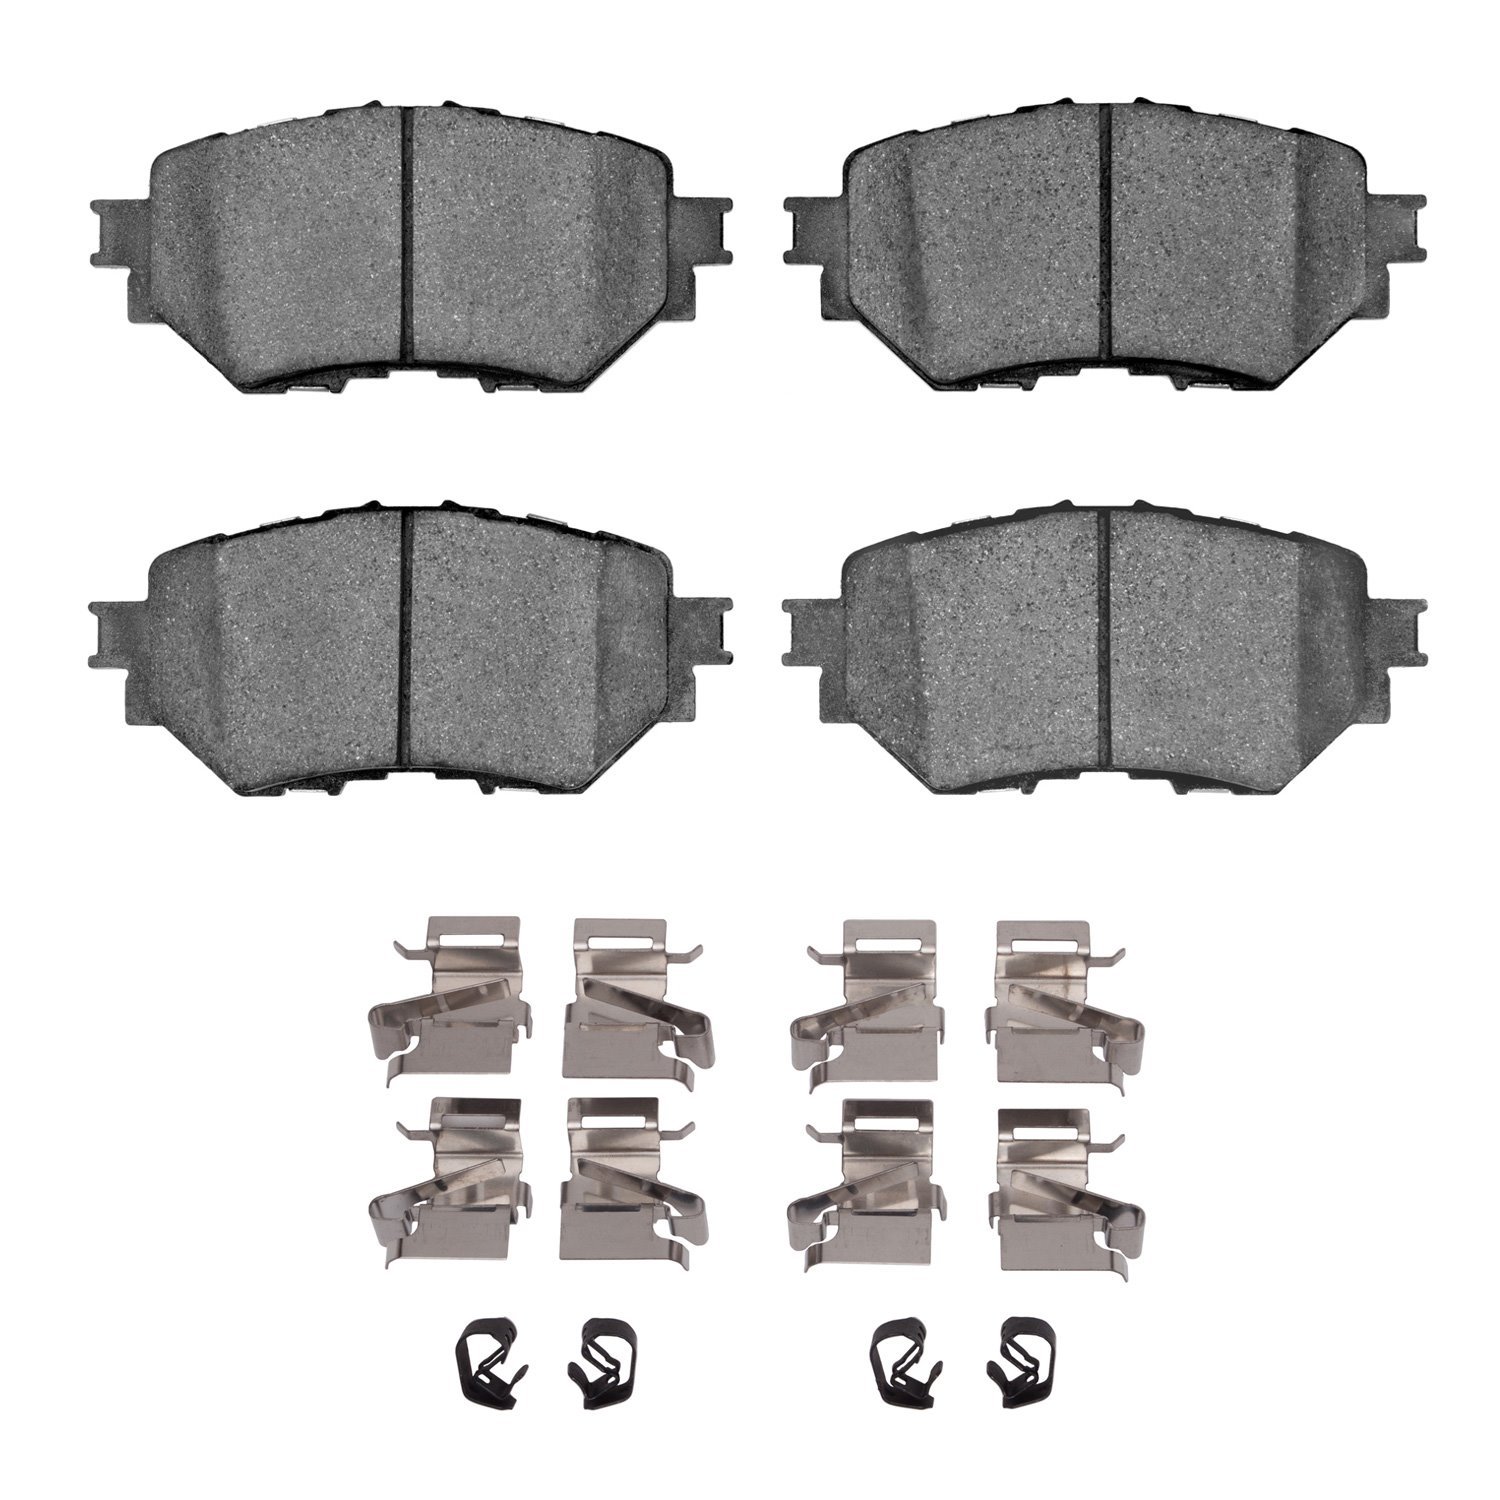 1310-1759-01 3000-Series Ceramic Brake Pads & Hardware Kit, 2014-2018 Ford/Lincoln/Mercury/Mazda, Position: Front